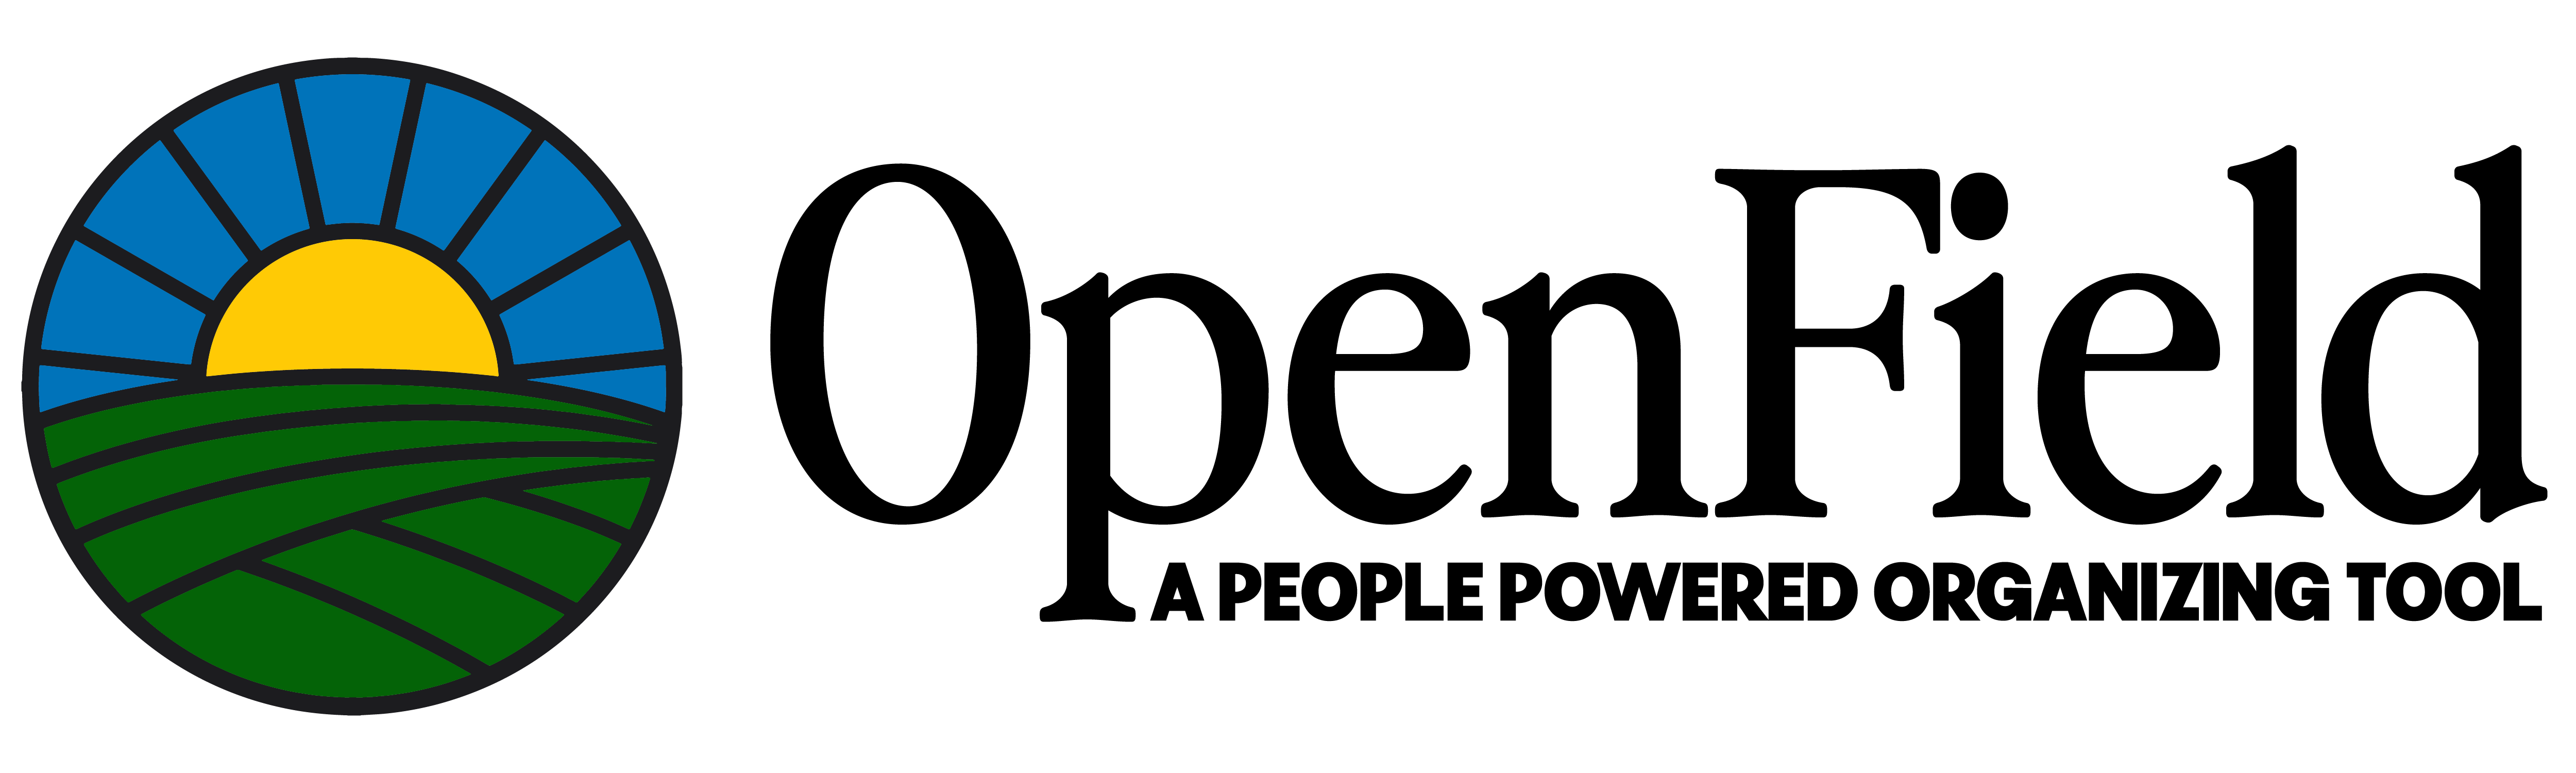 Full OpenField Logo-01